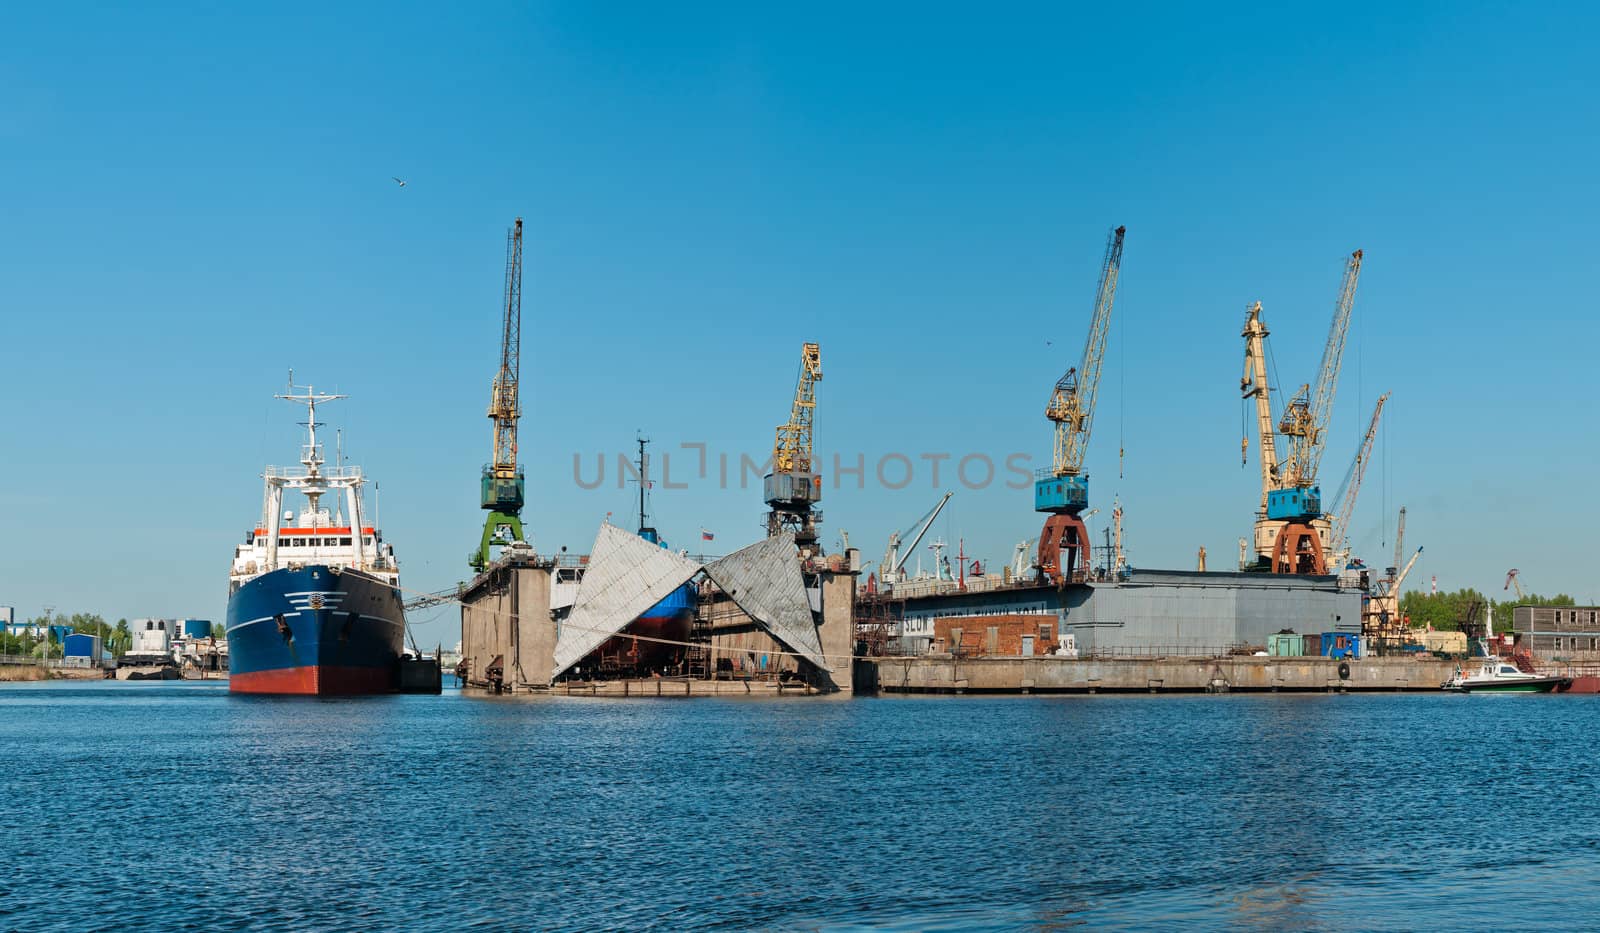 Shipyard with ships panorama by dmitryelagin